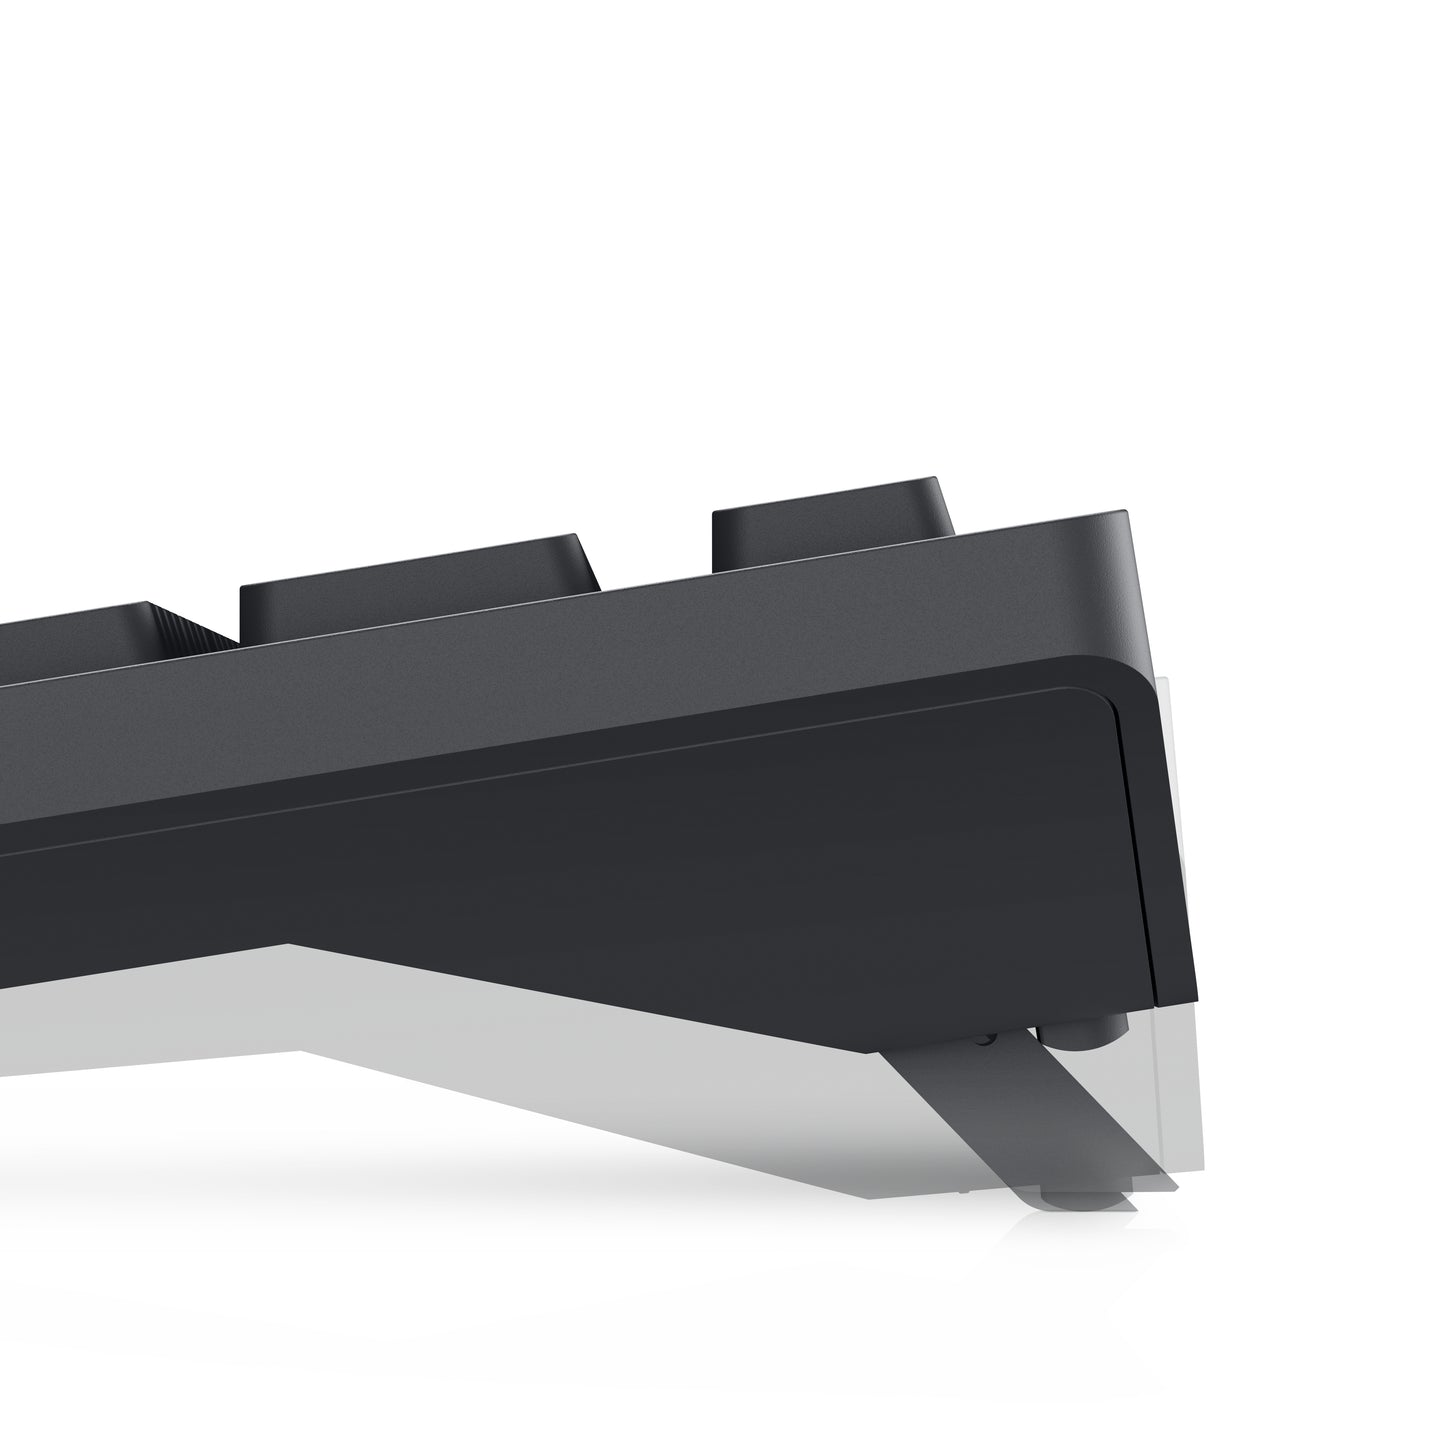 Dell Pro KM5221W - Tastatur-und-Maus-Set - kabellos black QWERTZ DE